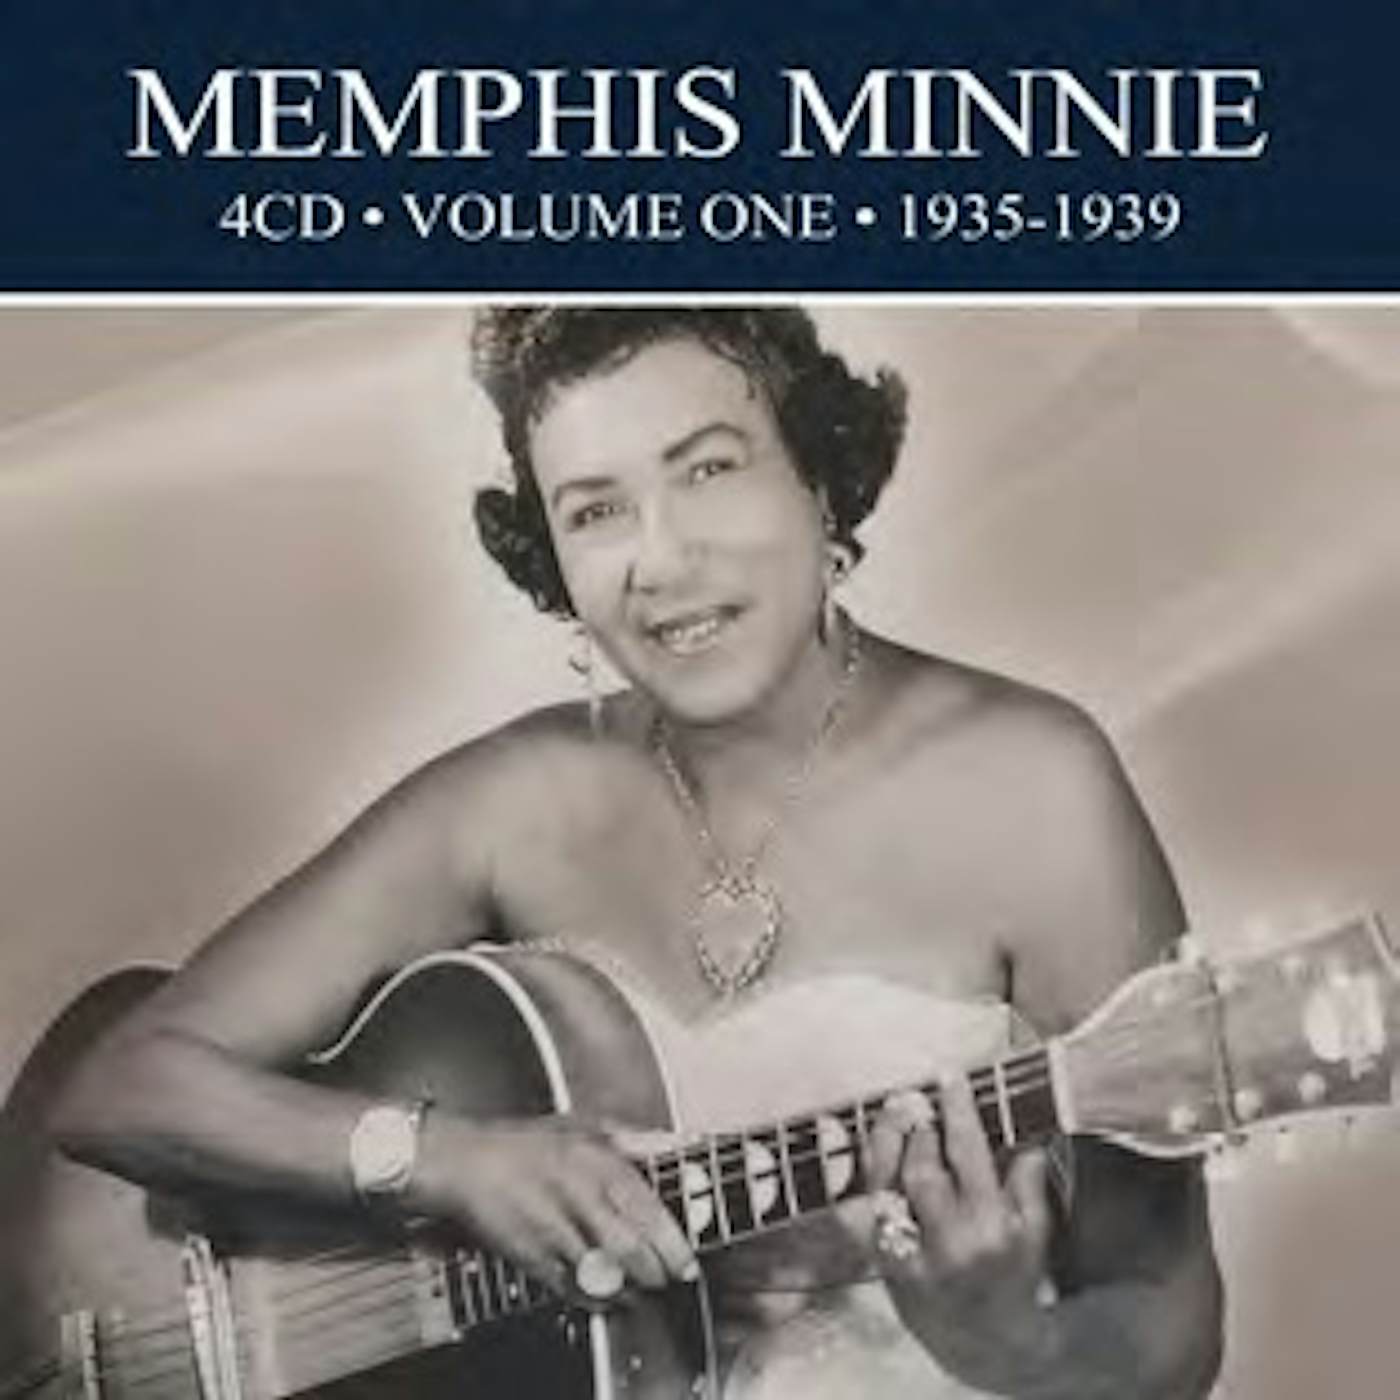 Memphis Minnie VOLUME 1: THE 1930'S CD